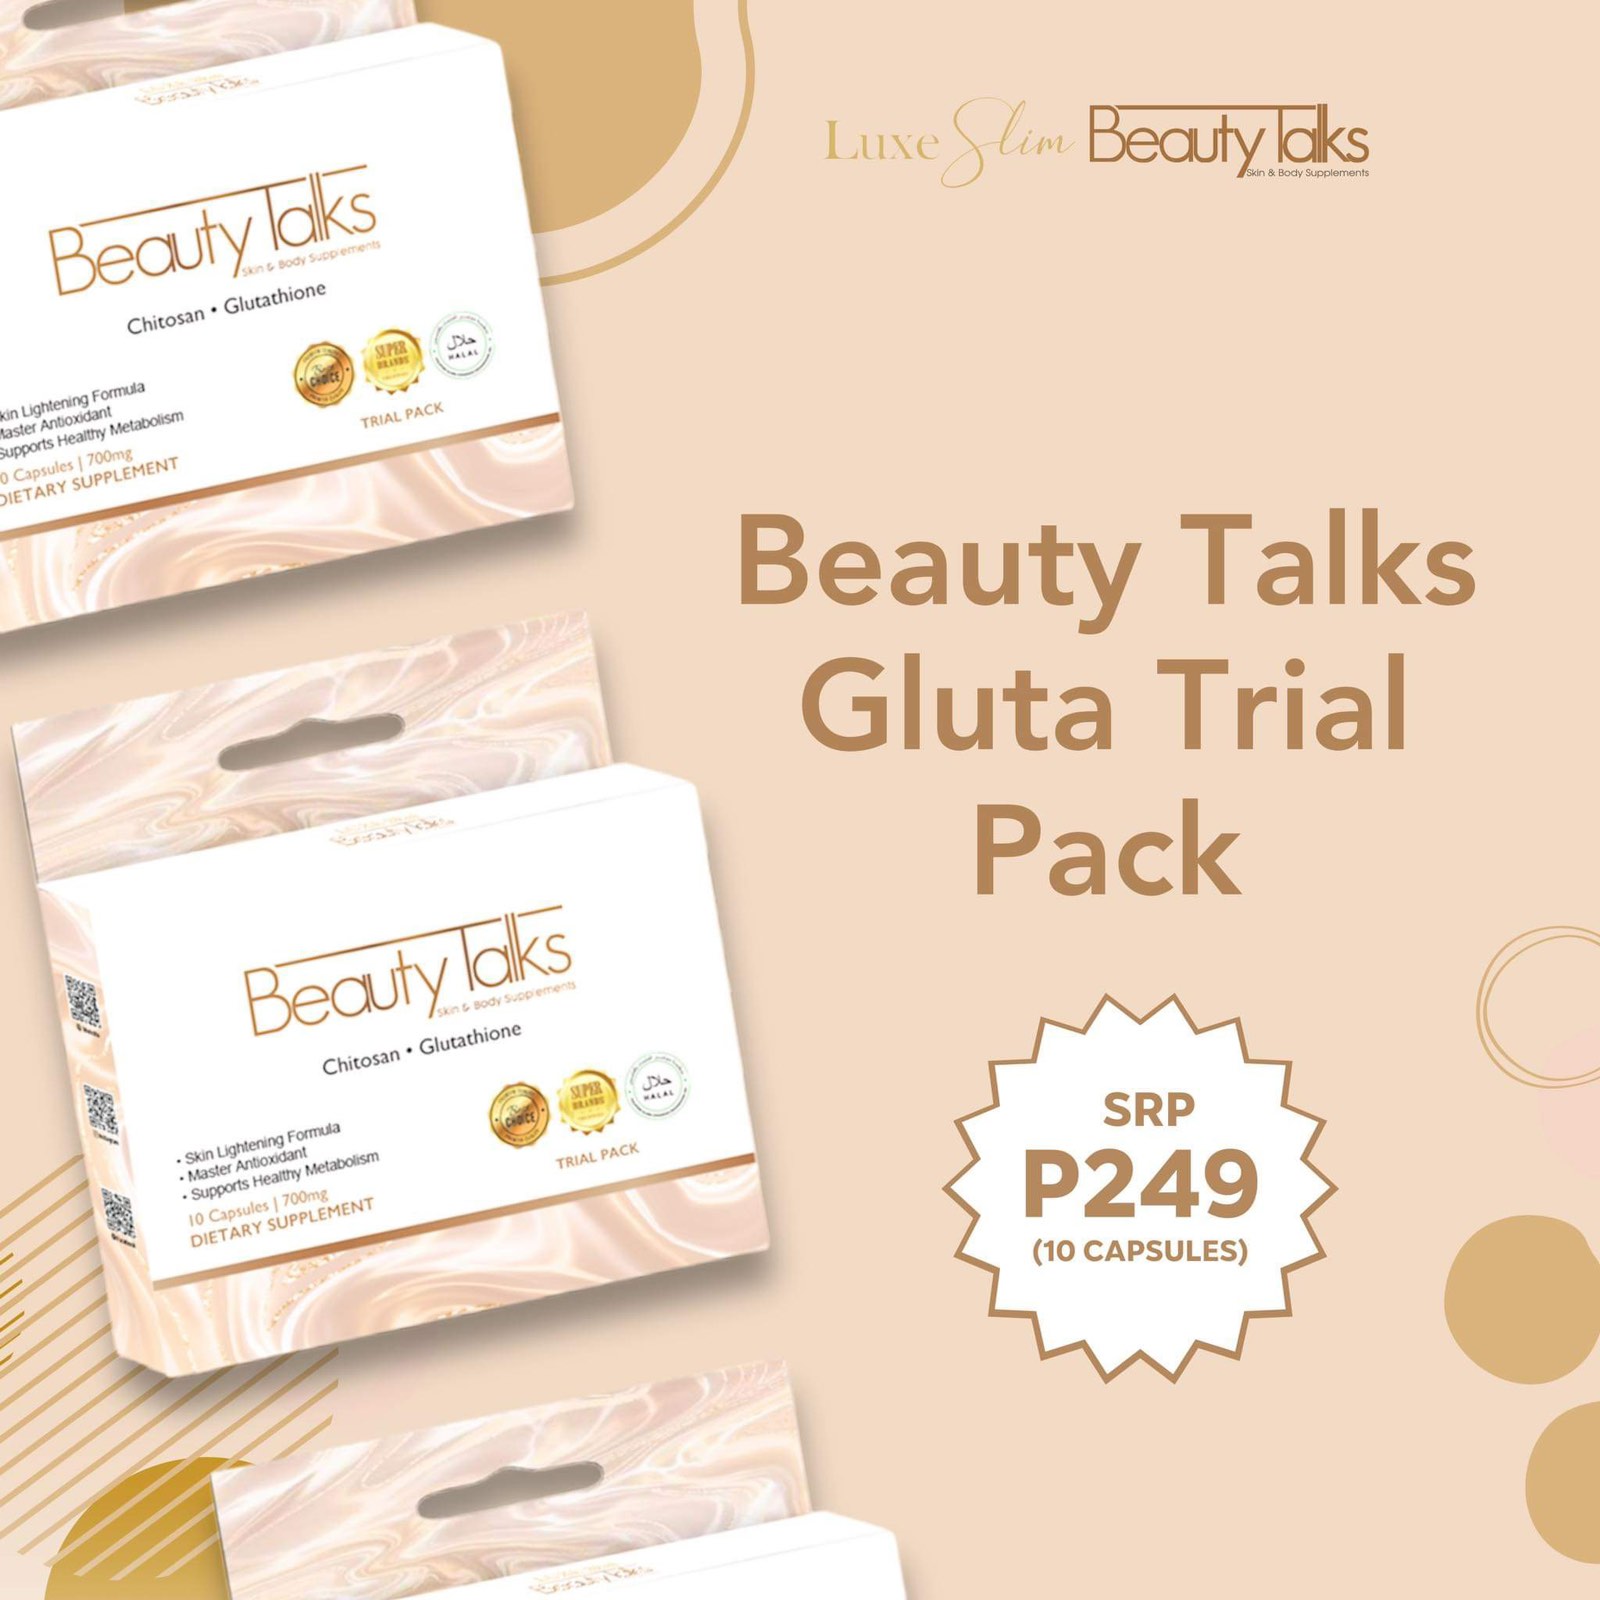 Luxe Slim Matcha Latte  Filipino Dietary Supplements NZ – Bini Beauty NZ